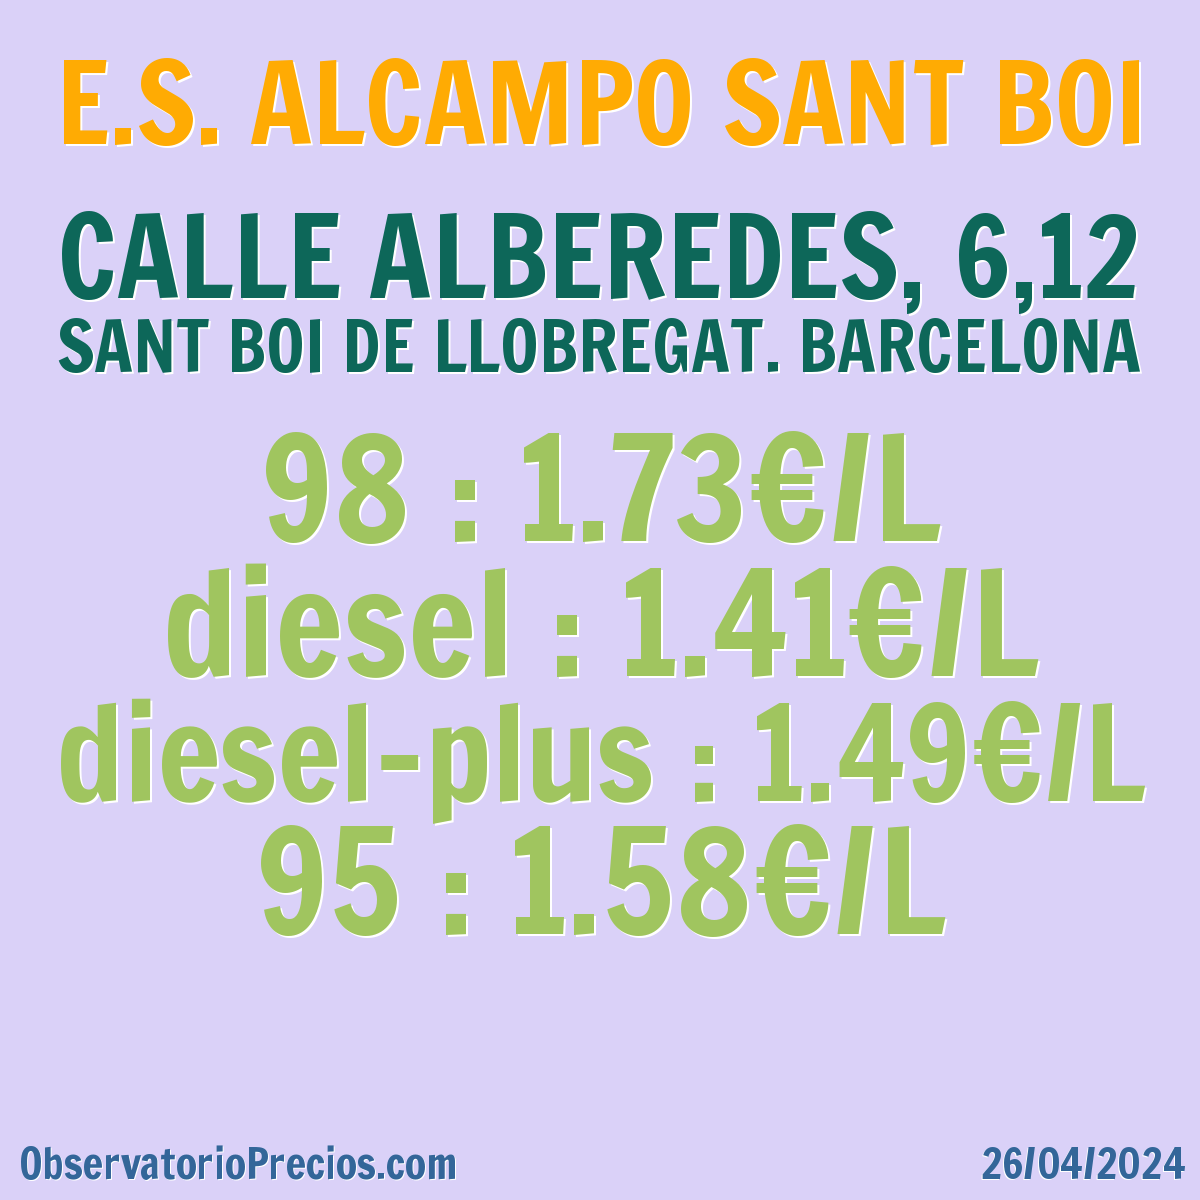 Máquina de escribir Fusión Creyente Gasolinera E.S. ALCAMPO SANT BOI en SANT BOI DE LLOBREGAT Gasolina 95  (G.Protección): 1.495€, Gasolina 98: 1.590€, Diesel (Gasoleo A): 1.379€